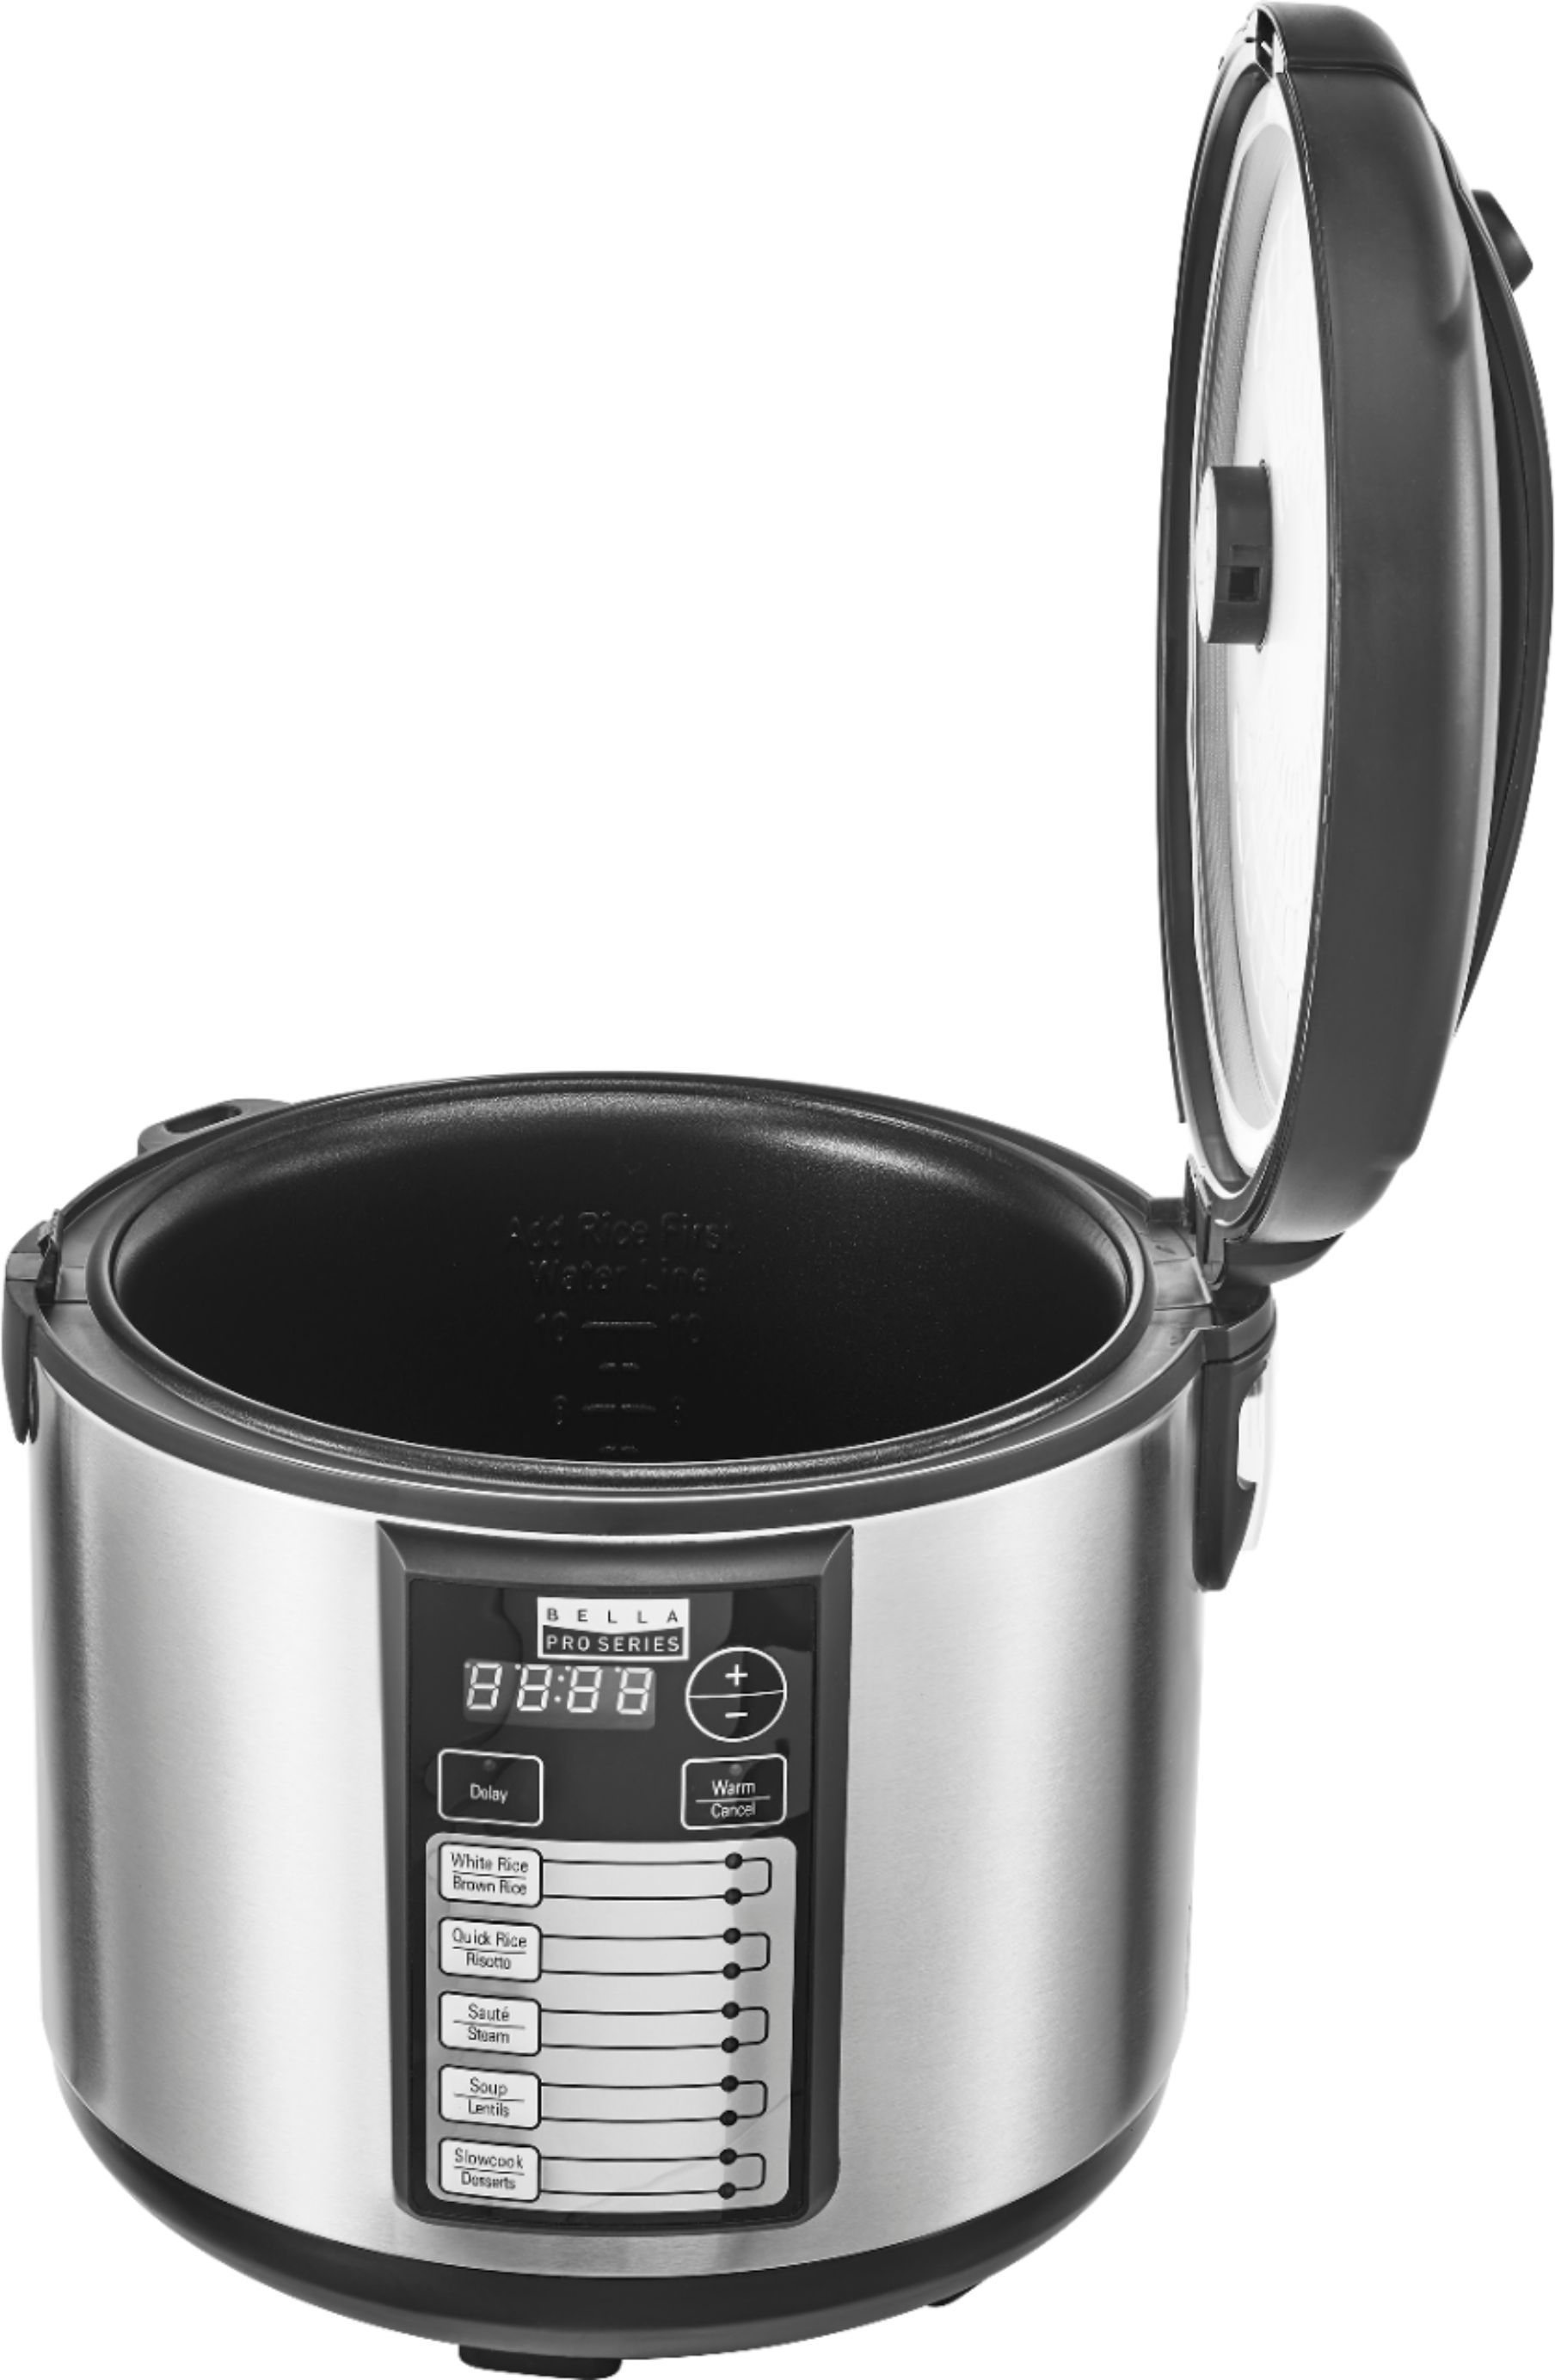 Premium PRC1846 20 Cups Deluxe Rice Cooker